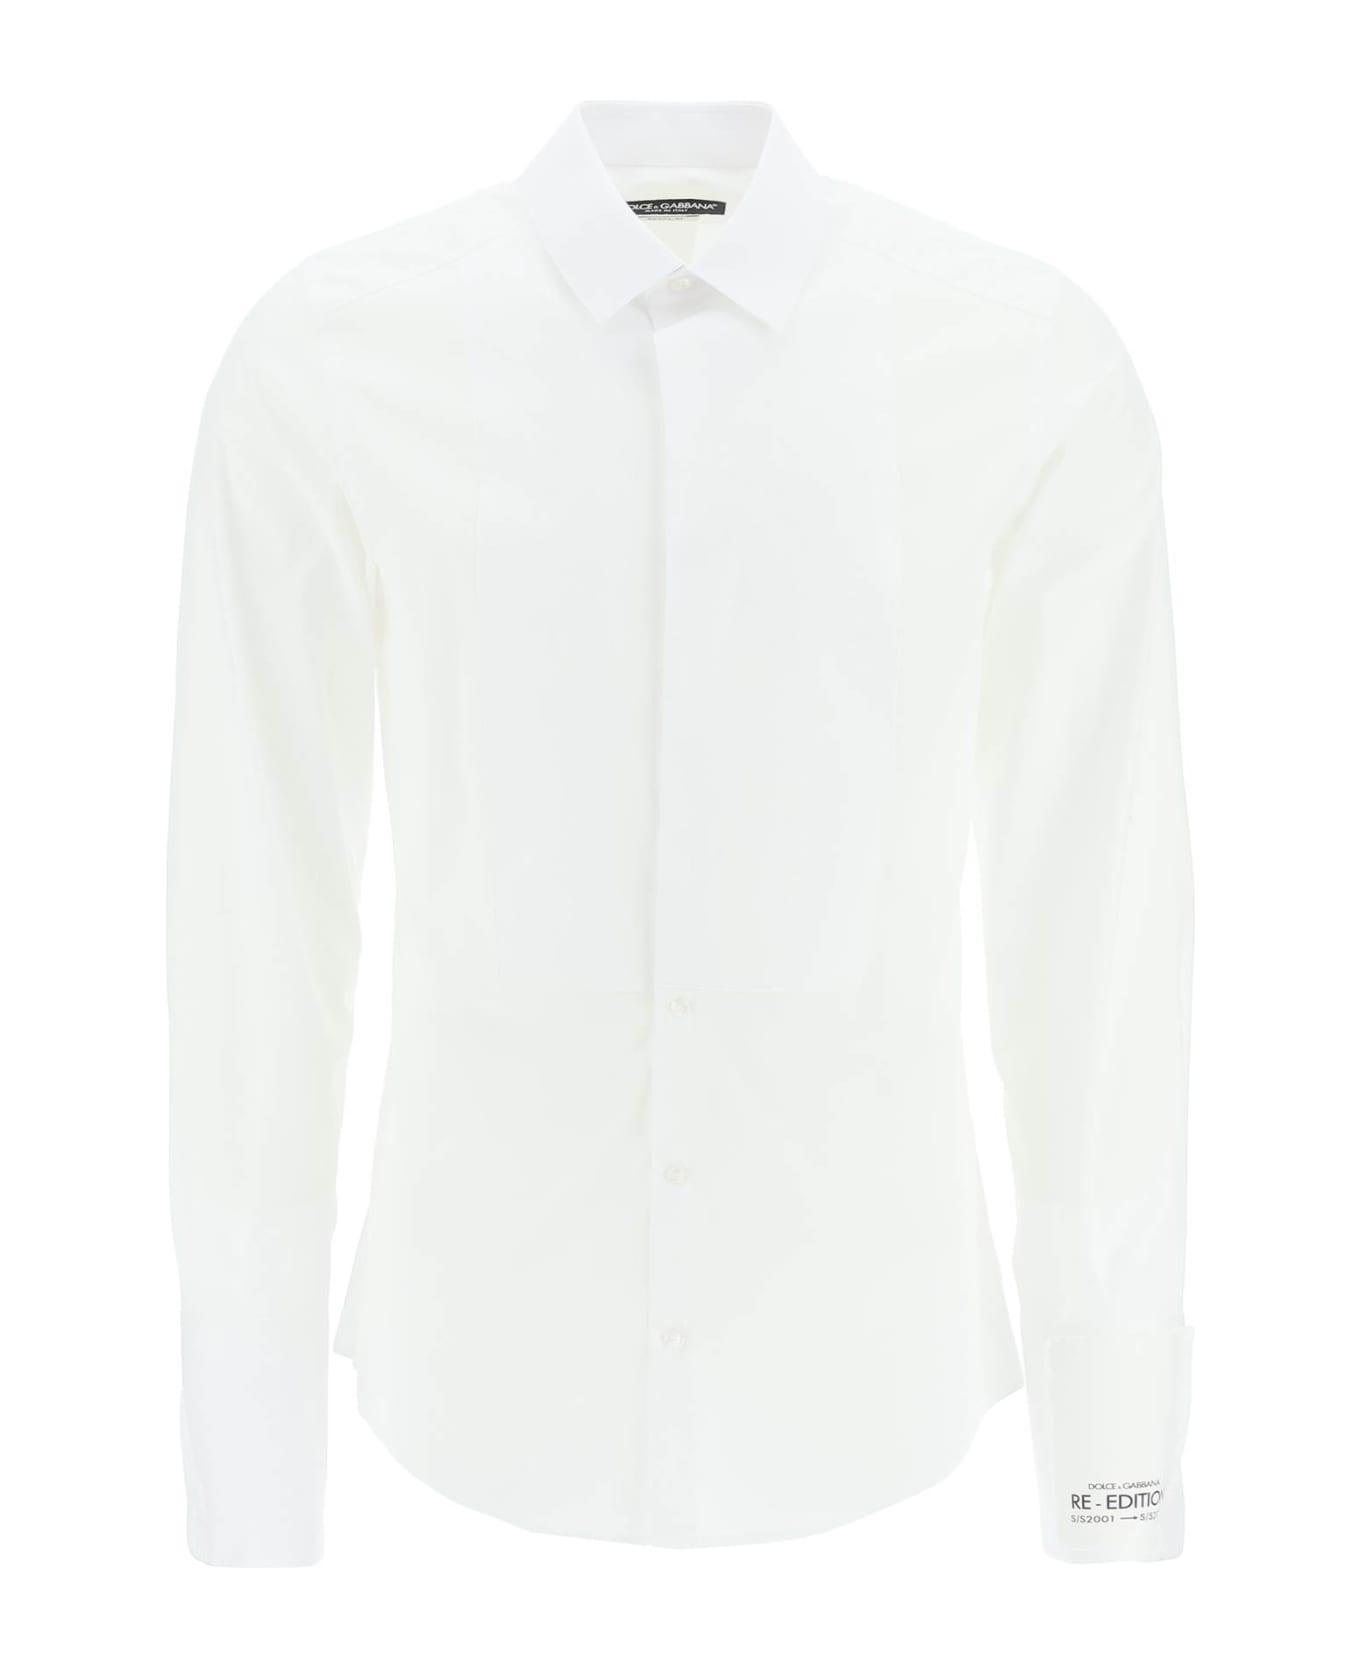 Dolce & Gabbana Re-edition Gold-fit Tuxedo Shirt - Bianco